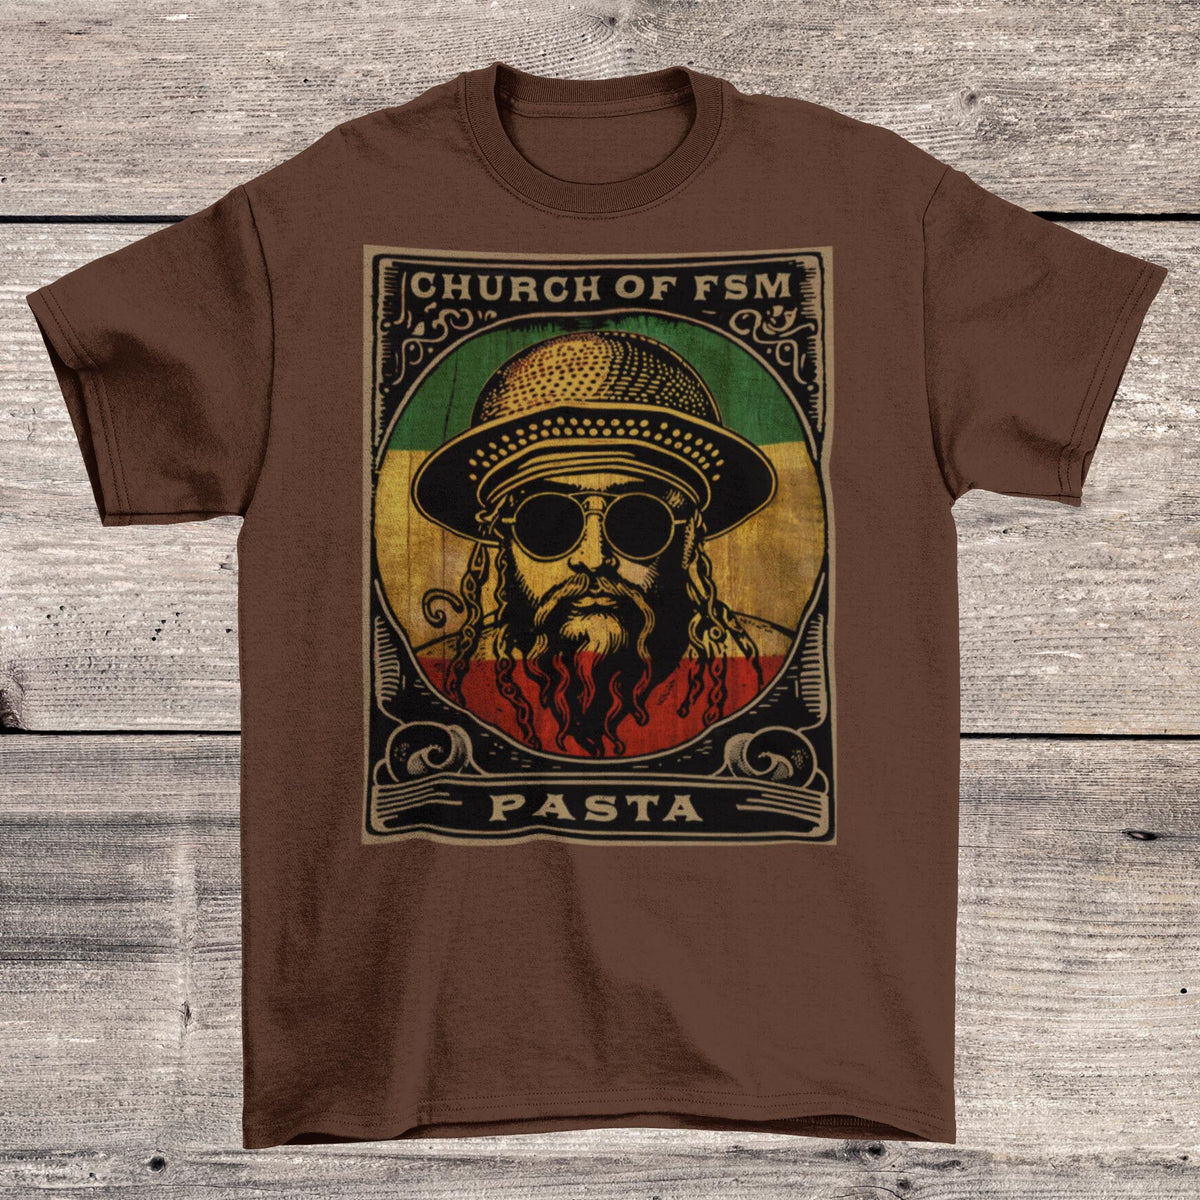 T-Shirts XS / Chestnut Pastafarianism &amp; The Flying Spaghetti Monster (FSM) | Reggae and Atheist Inspired Pasta Graphic Art T-Shirt